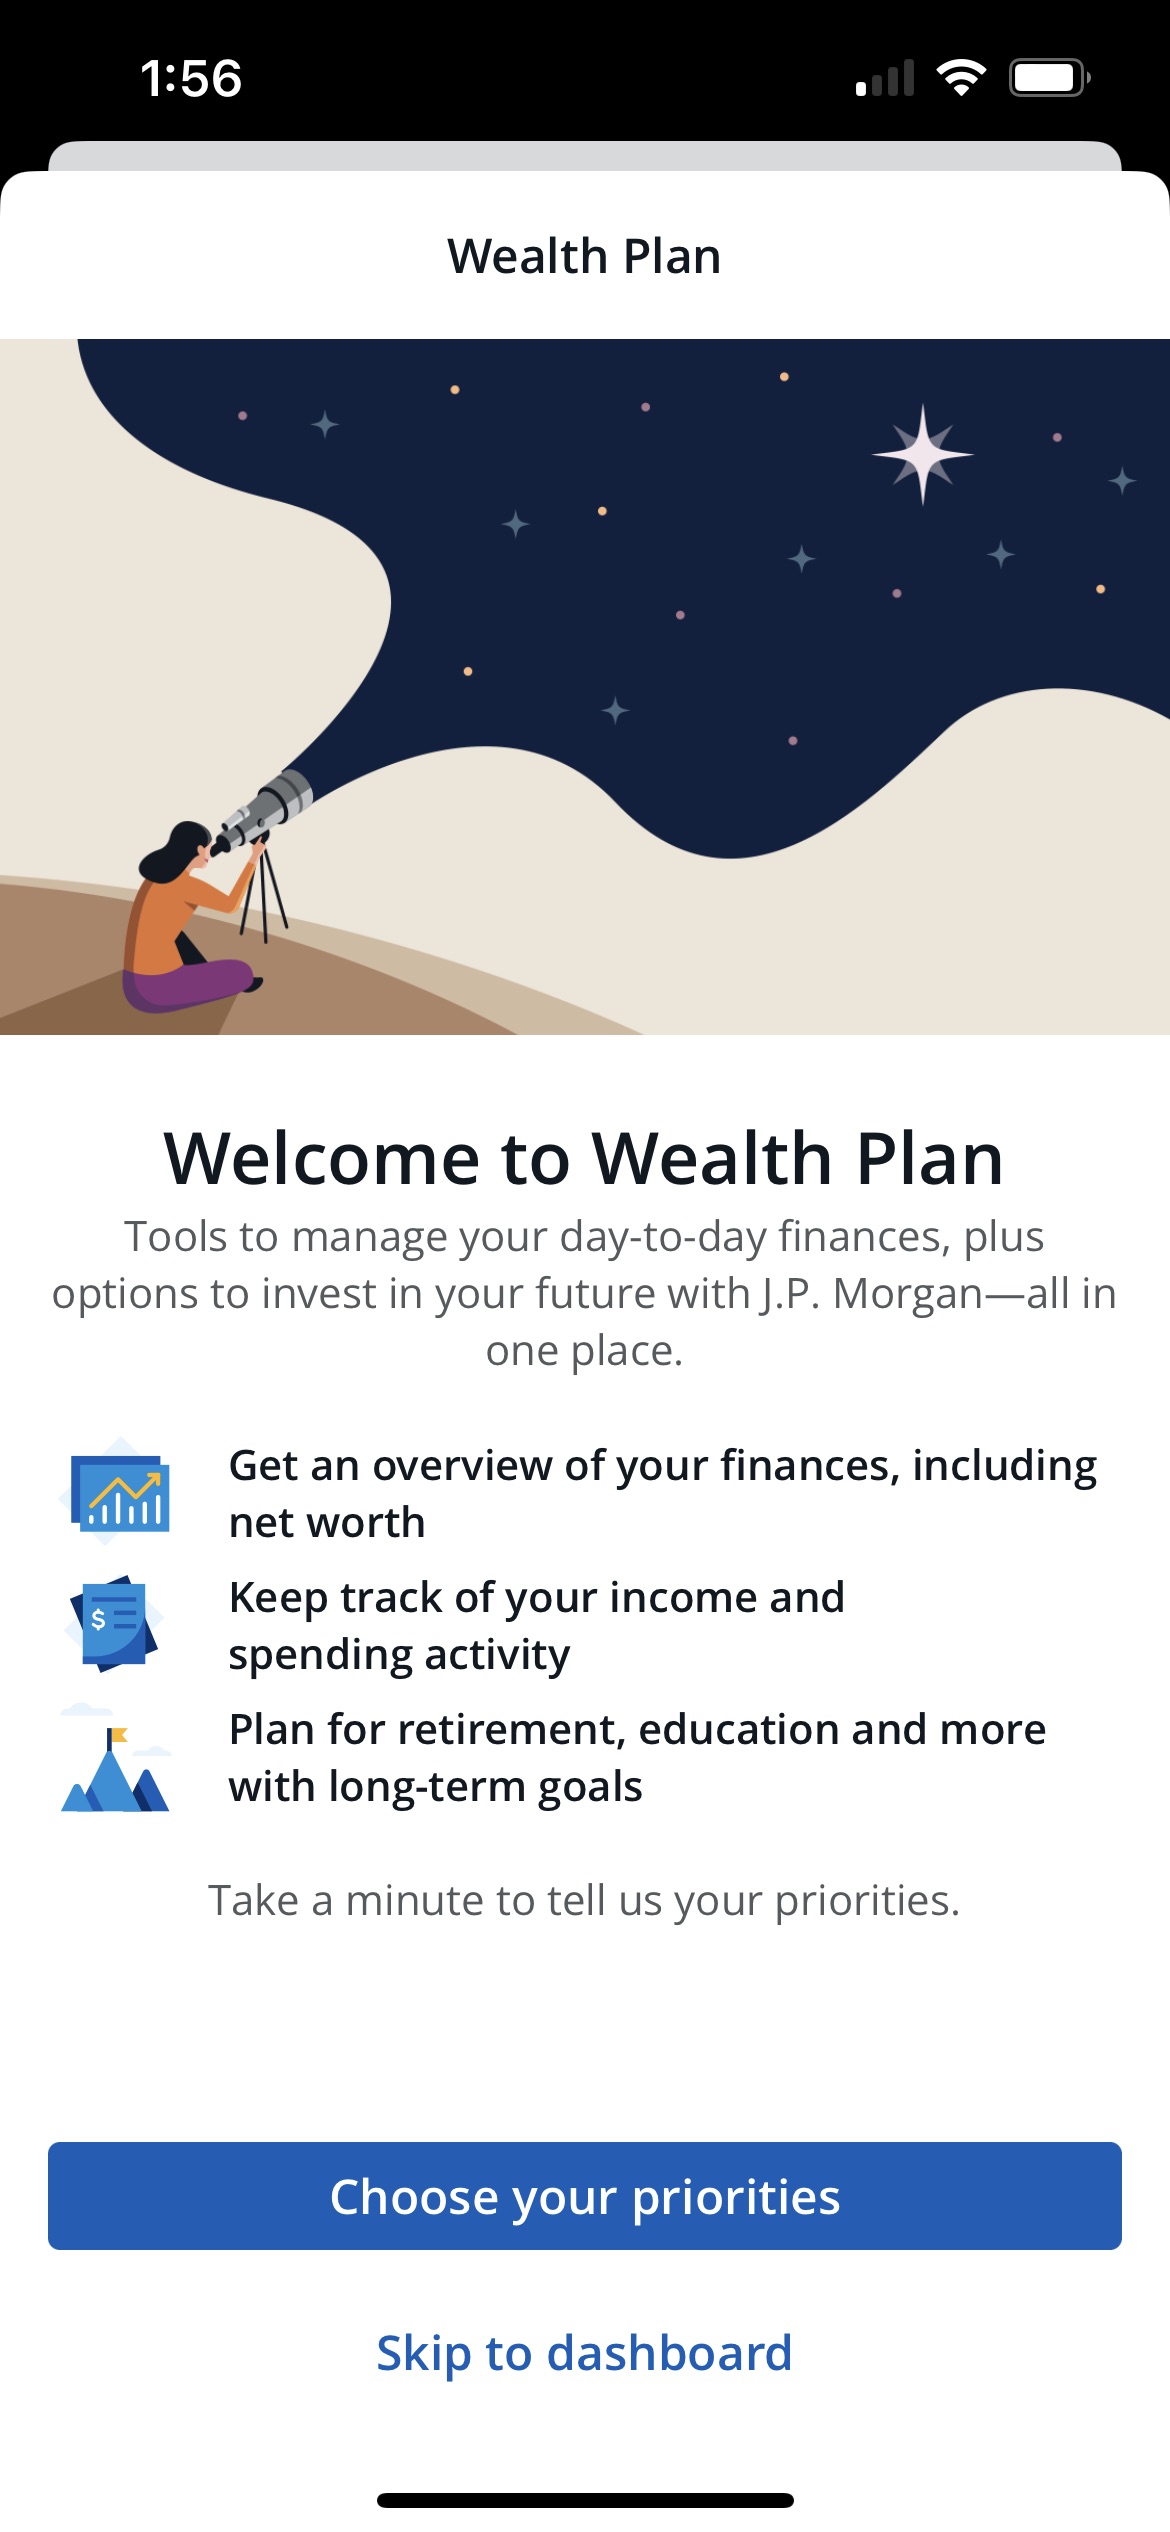 jpmorgan-wealth-plan.jpeg